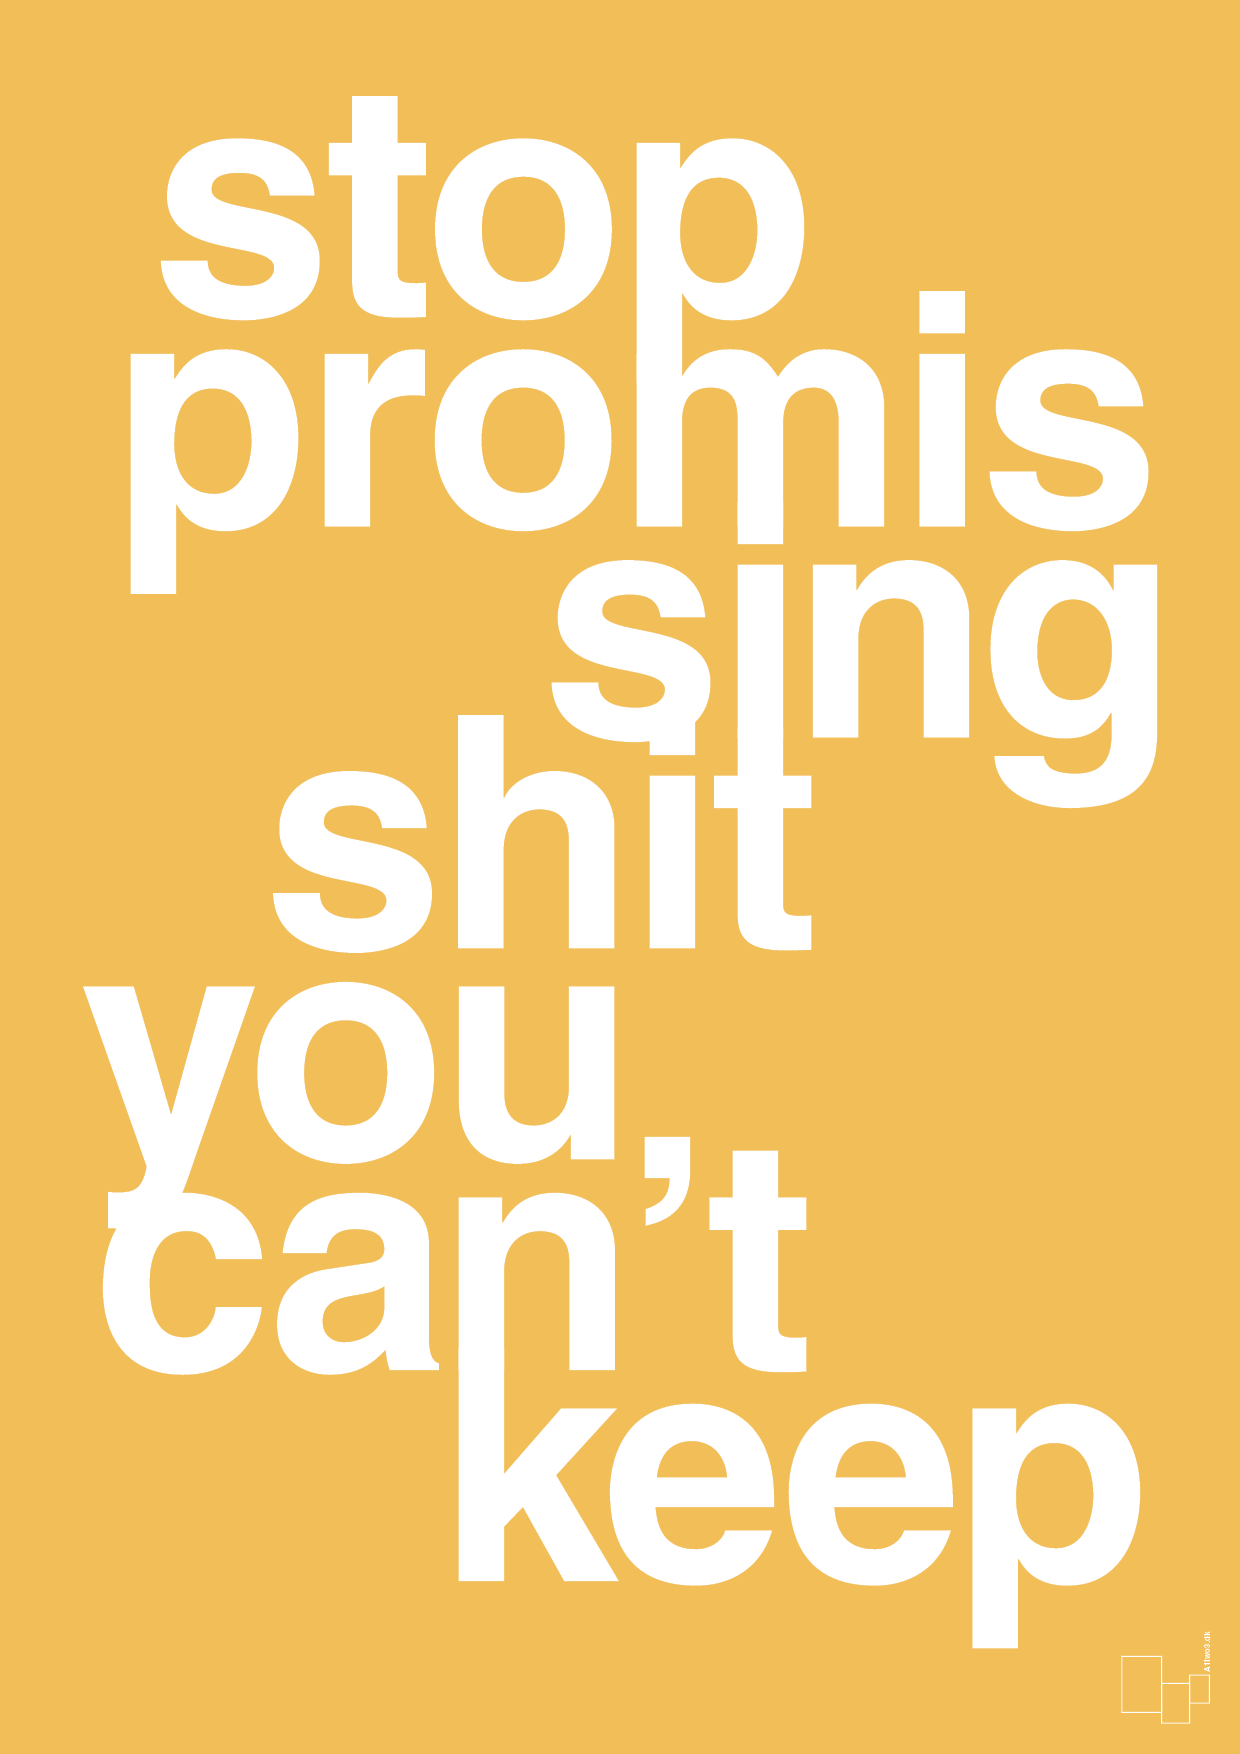 stop promissing shit you cant keep - Plakat med Ordsprog i Honeycomb